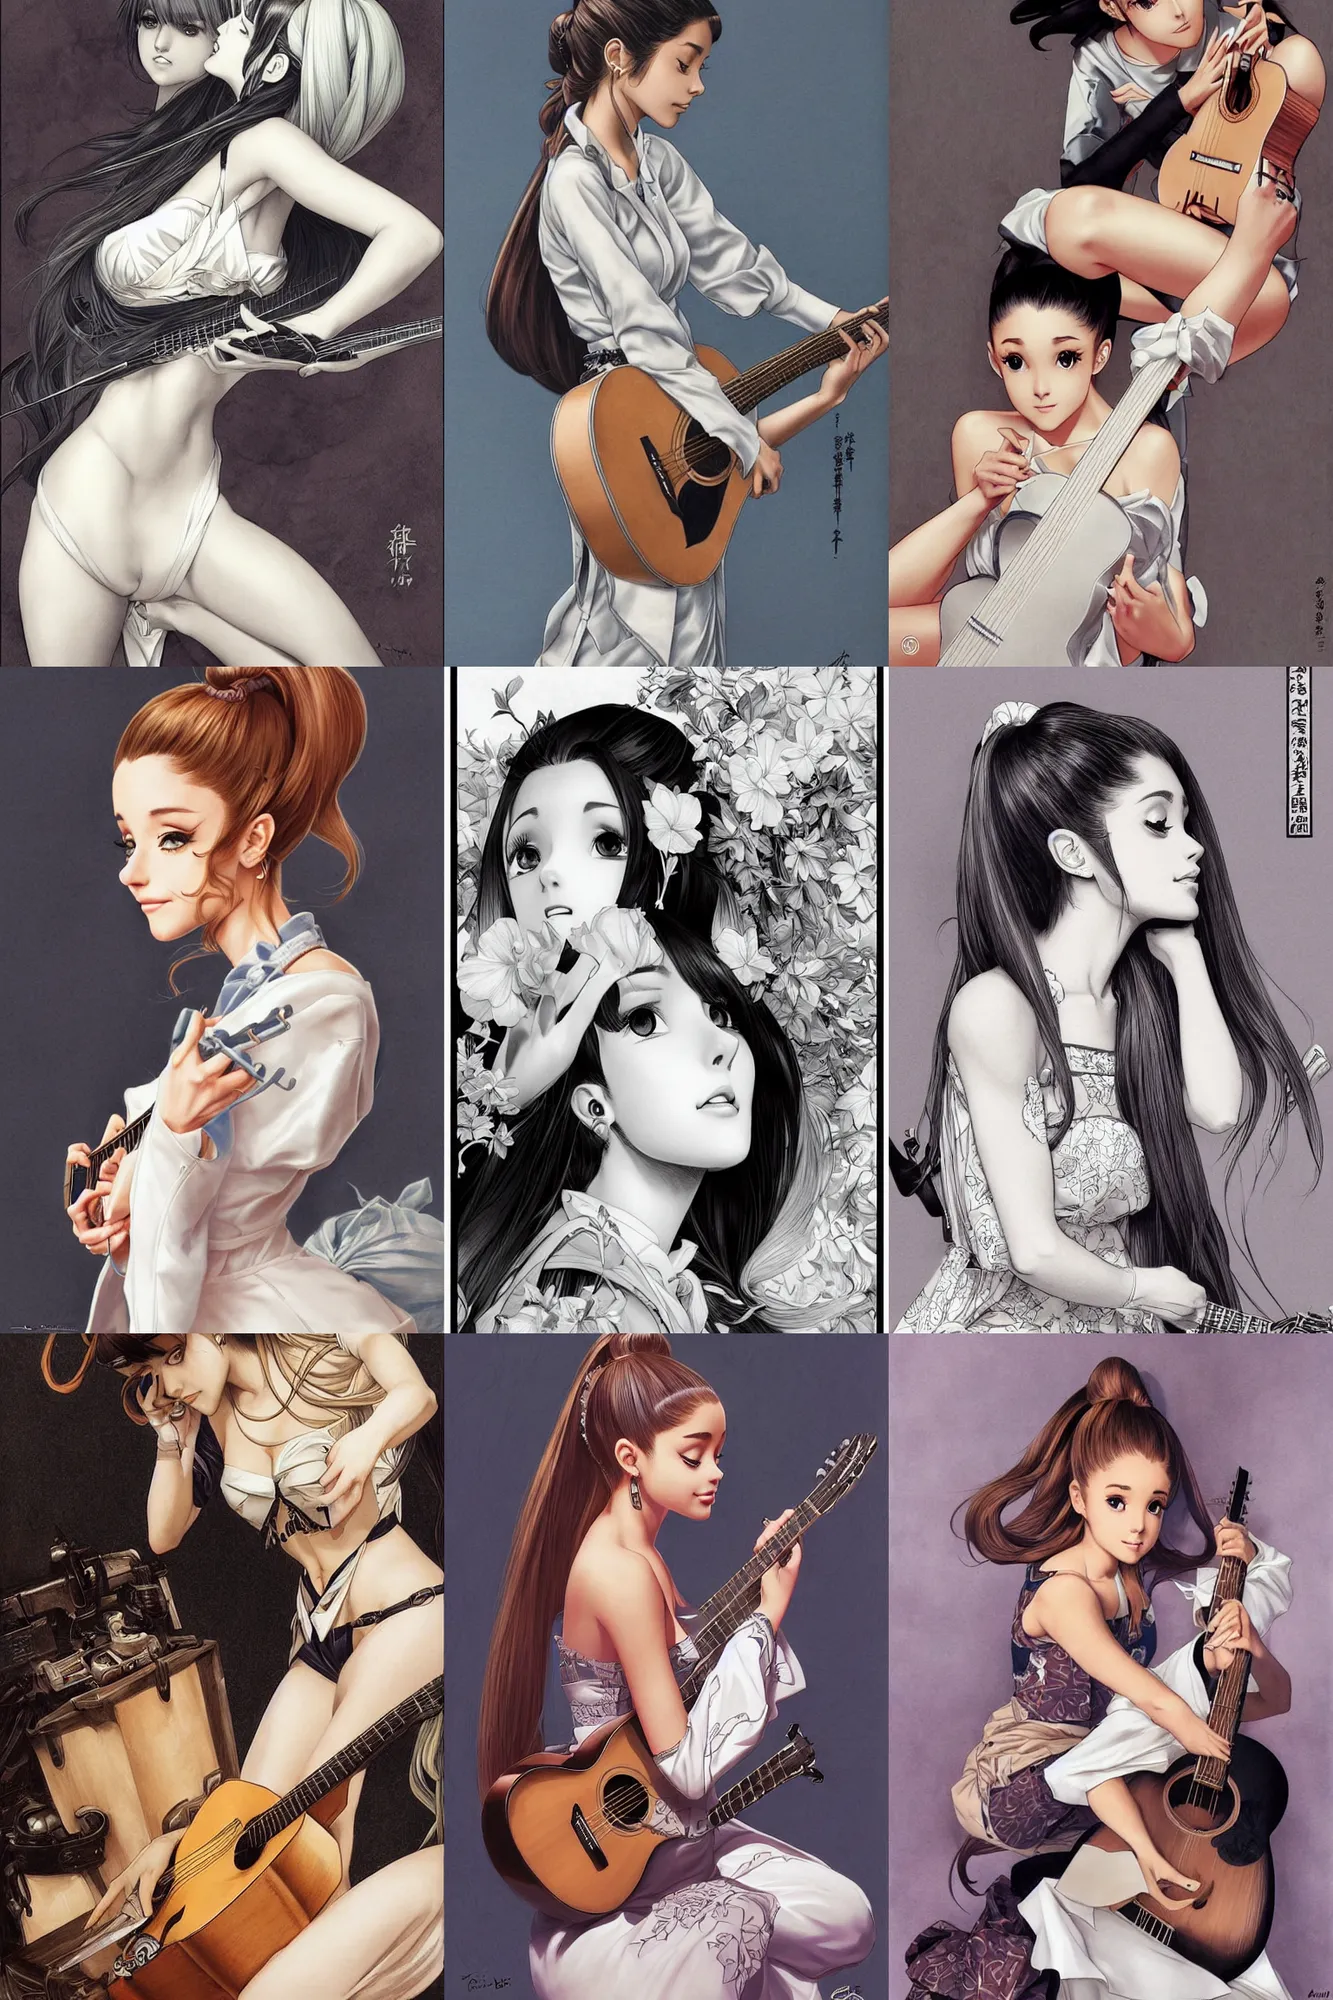 Prompt: Ariana Grande playing acoustic guitar, manga, highly detailed, beauty, art by Takehiko Inoue, Artgerm, intricate, elegant, J. C. Leyendecker